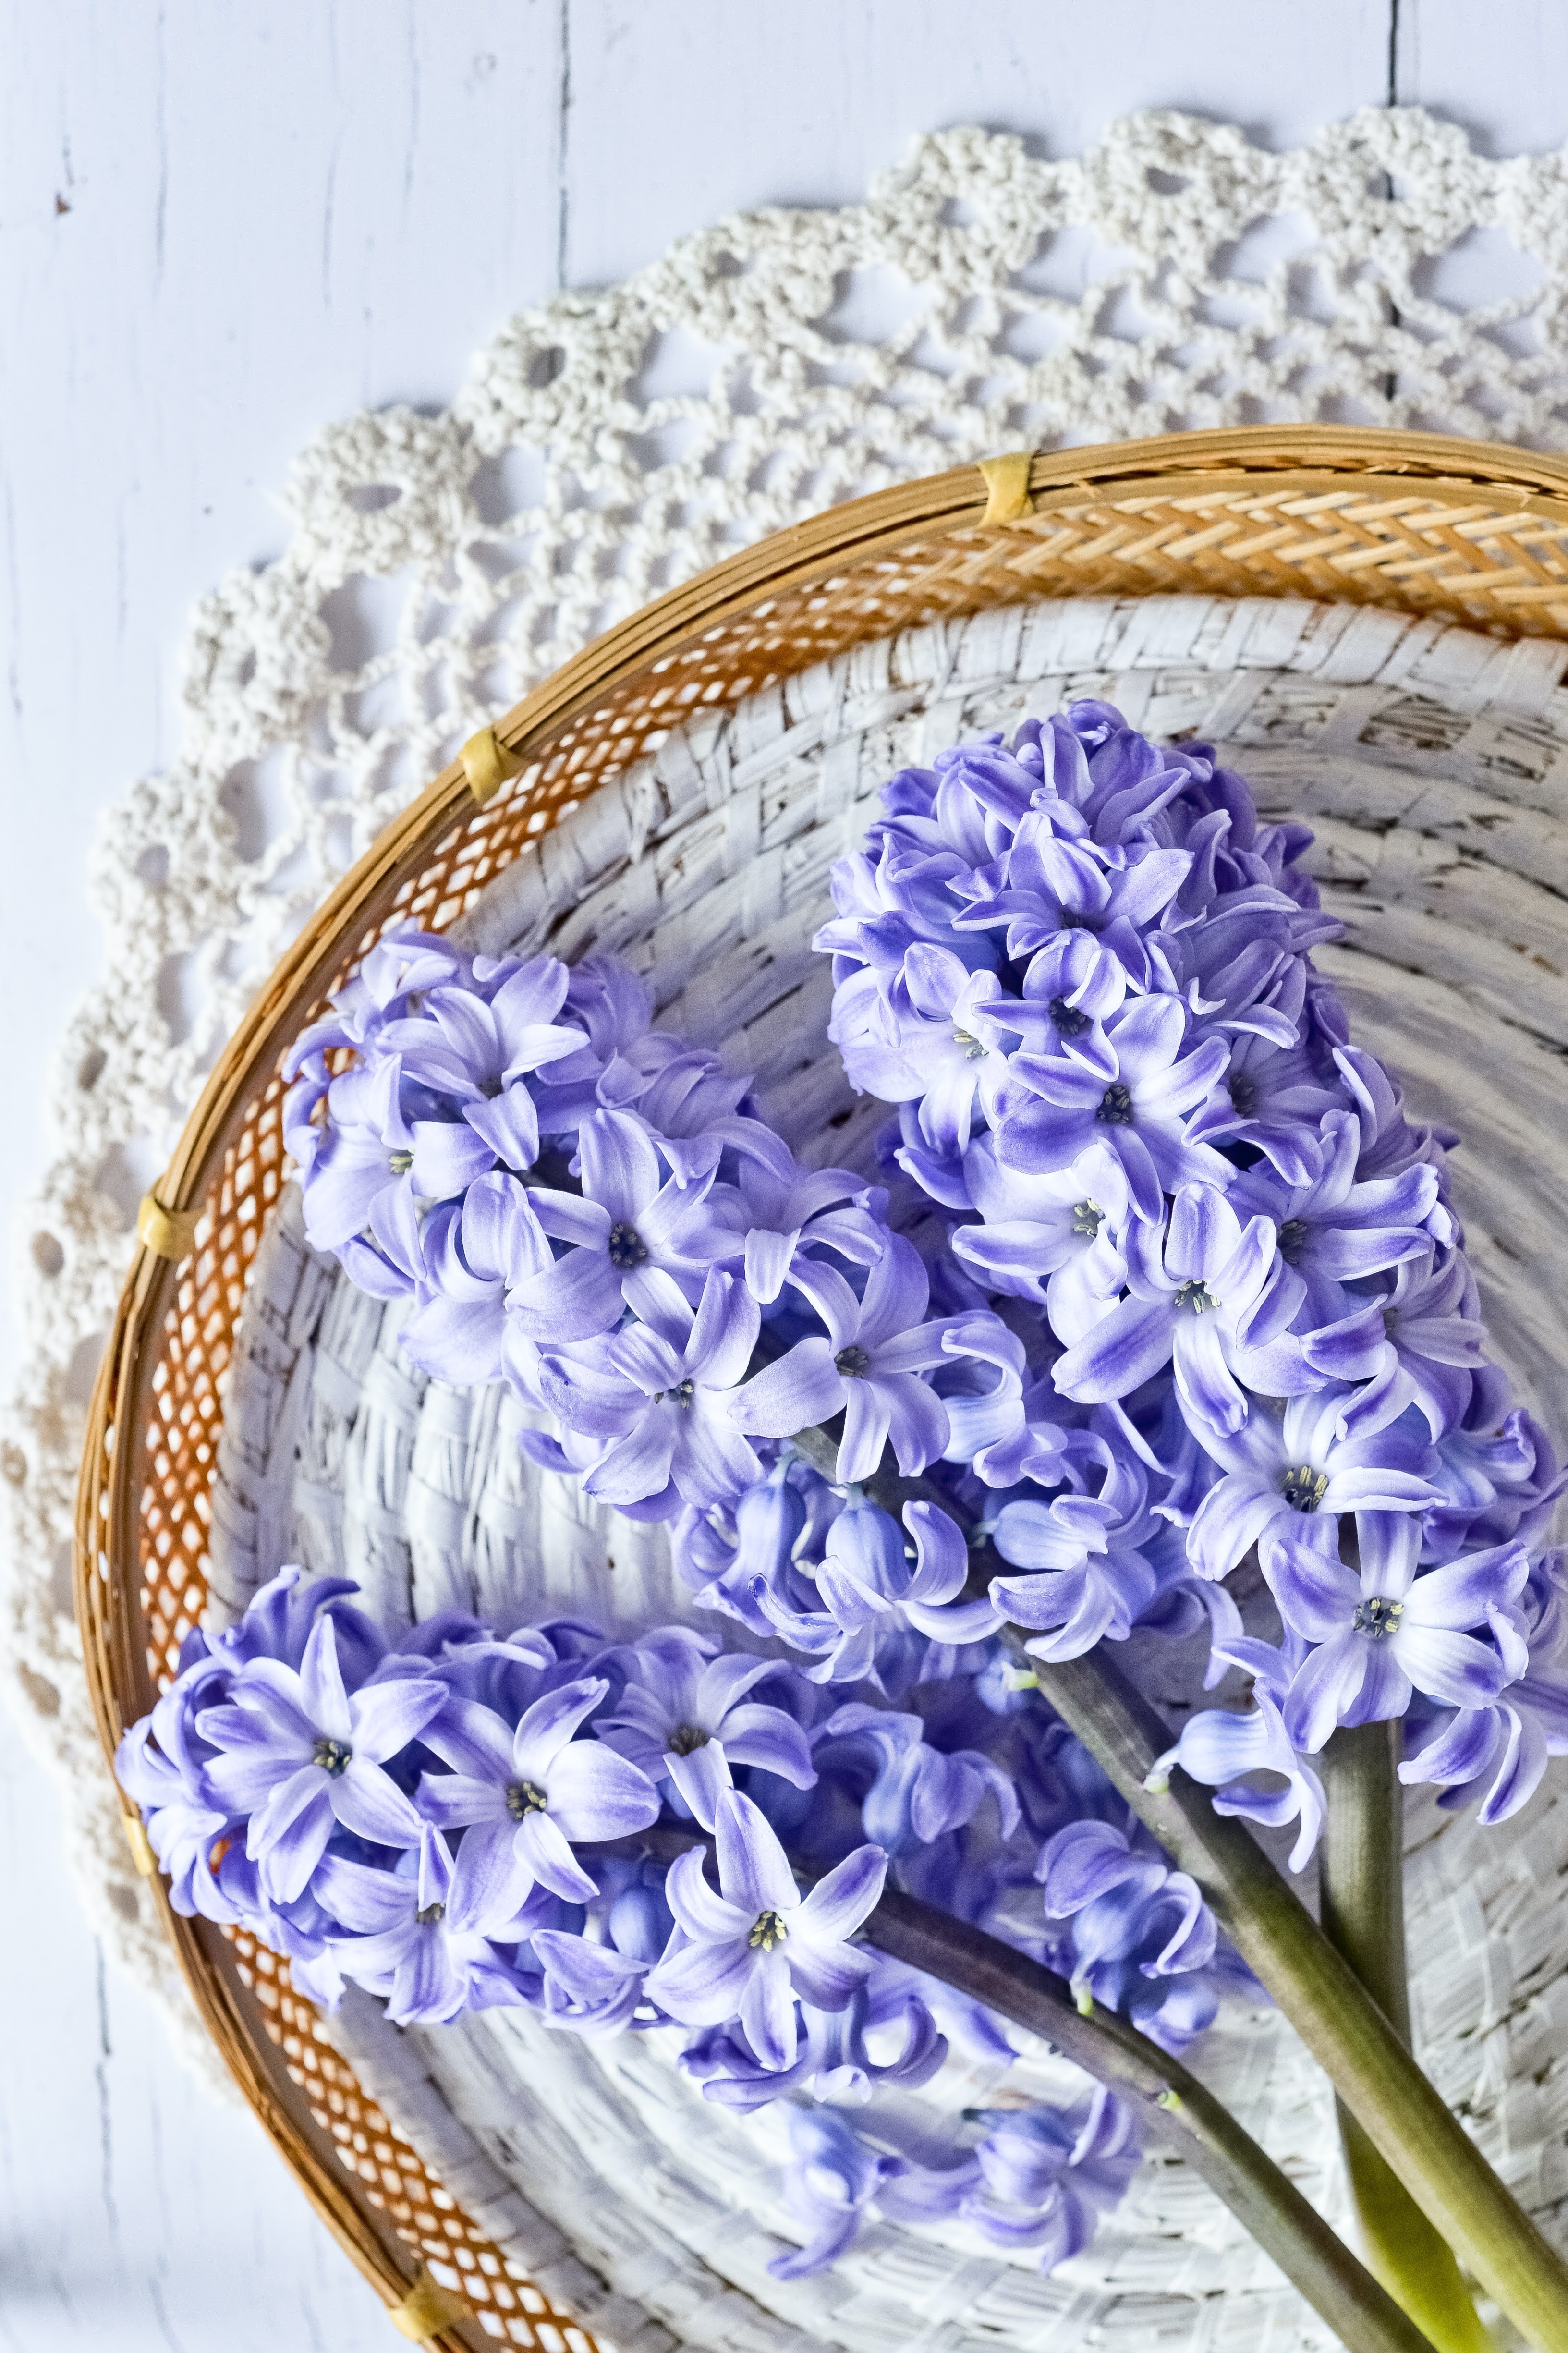 Purple Flowers on Brown Woven Basket | Photo by Margaret Jaszowska via Unsplash